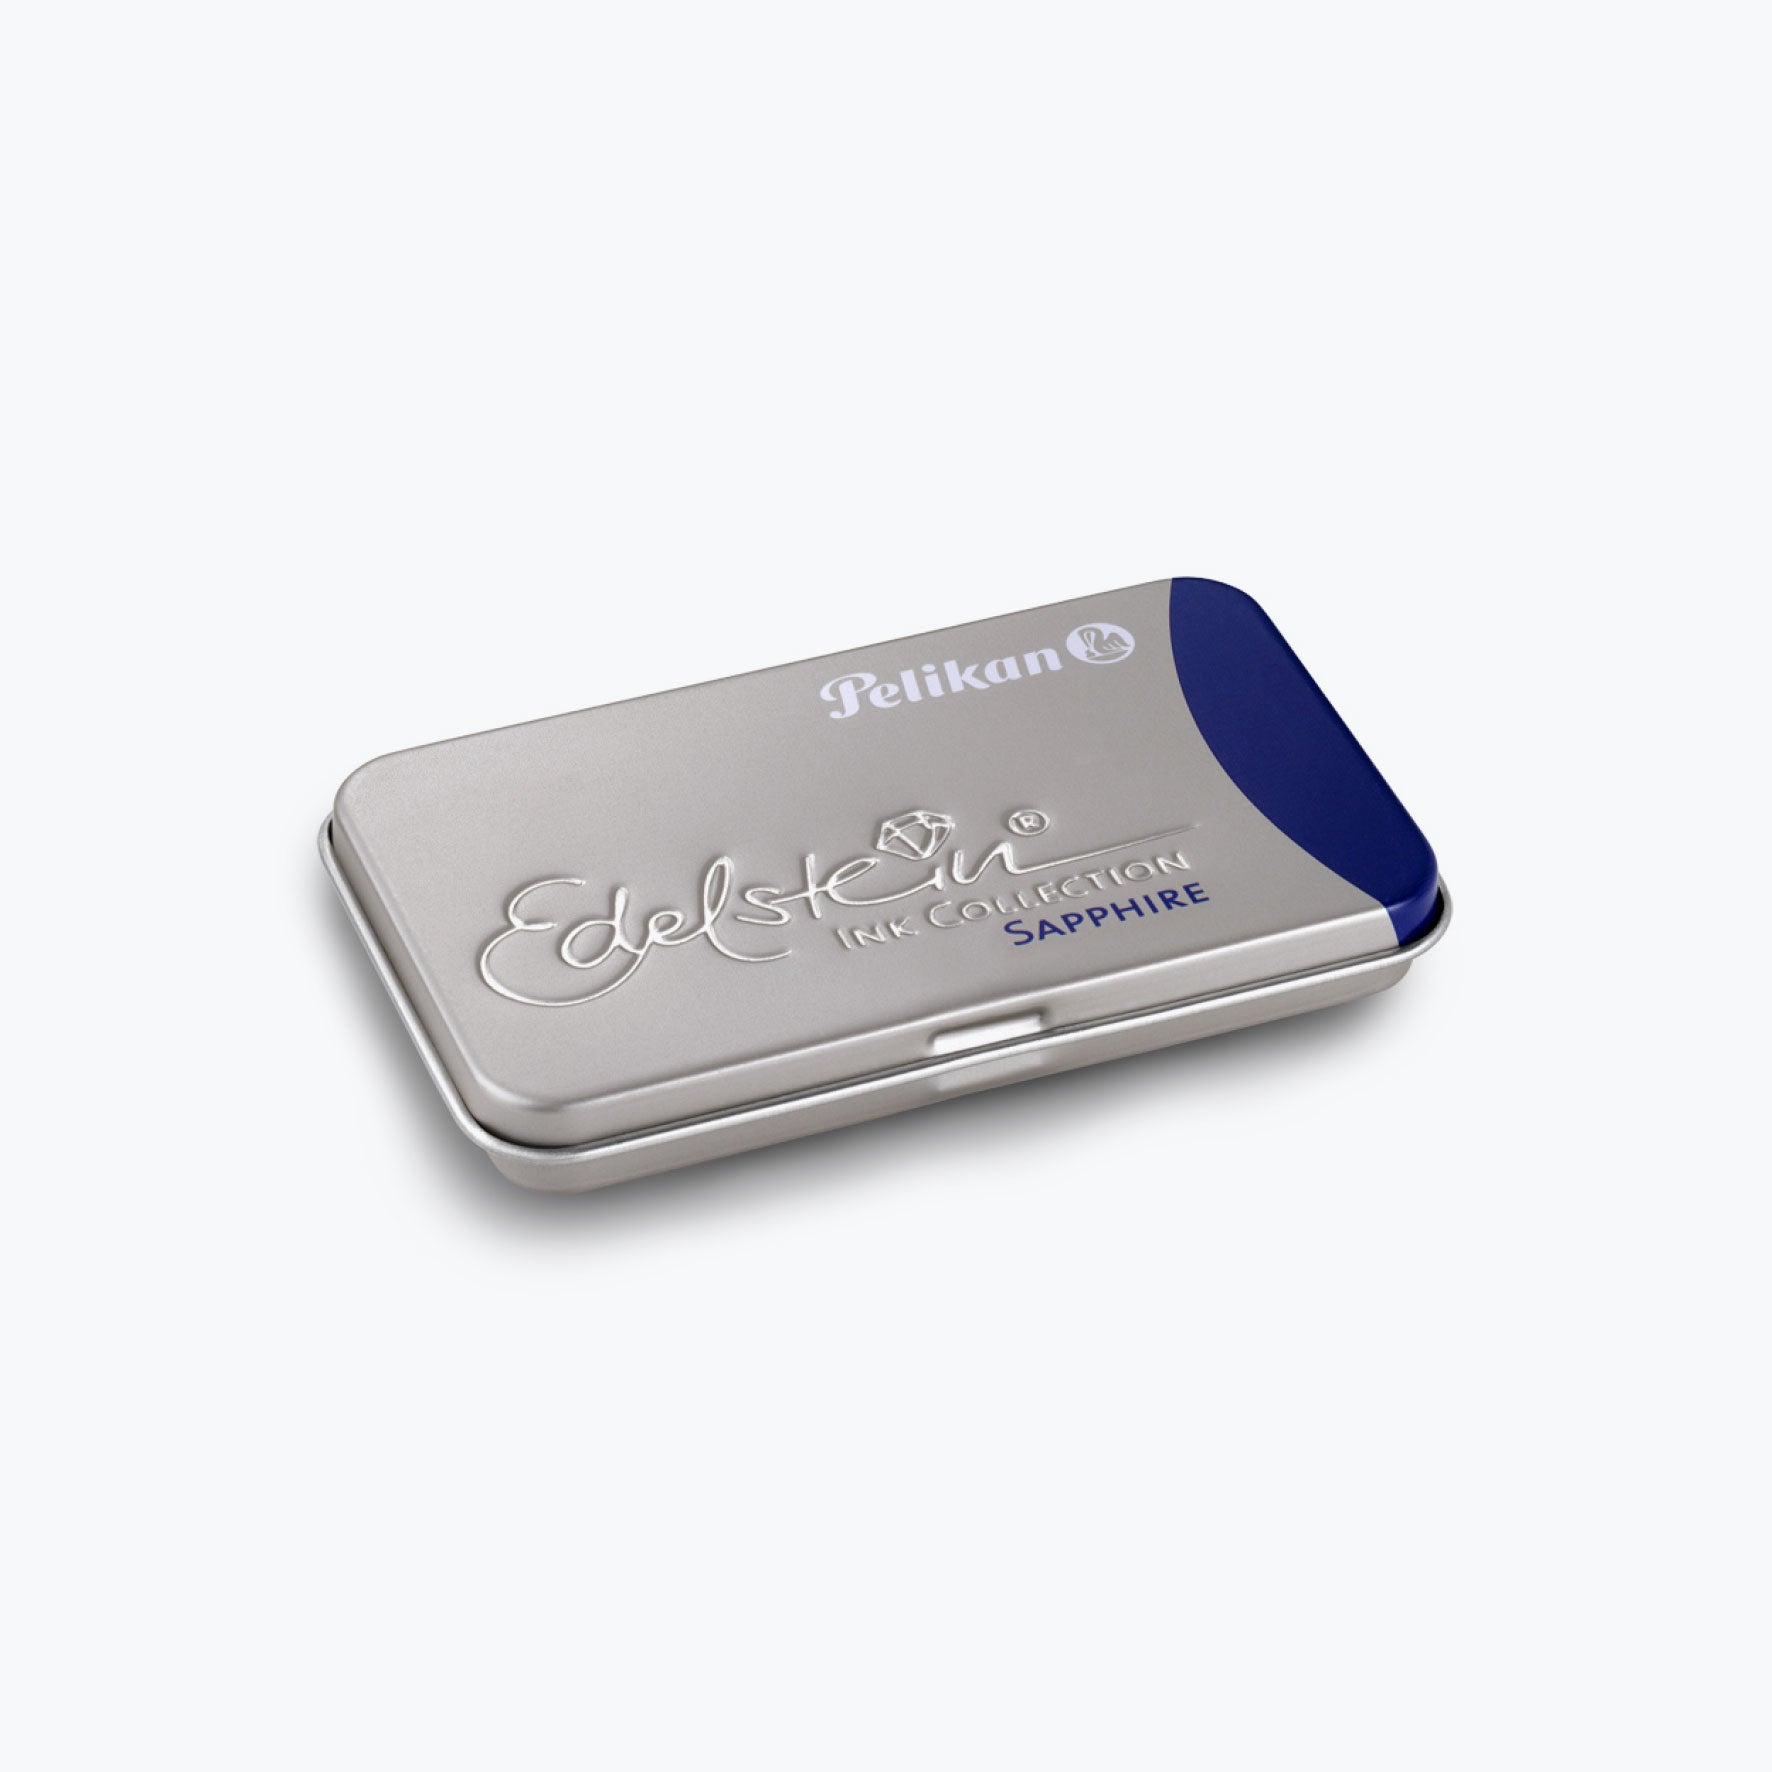 Pelikan - Edelstein Cartridges - Sapphire